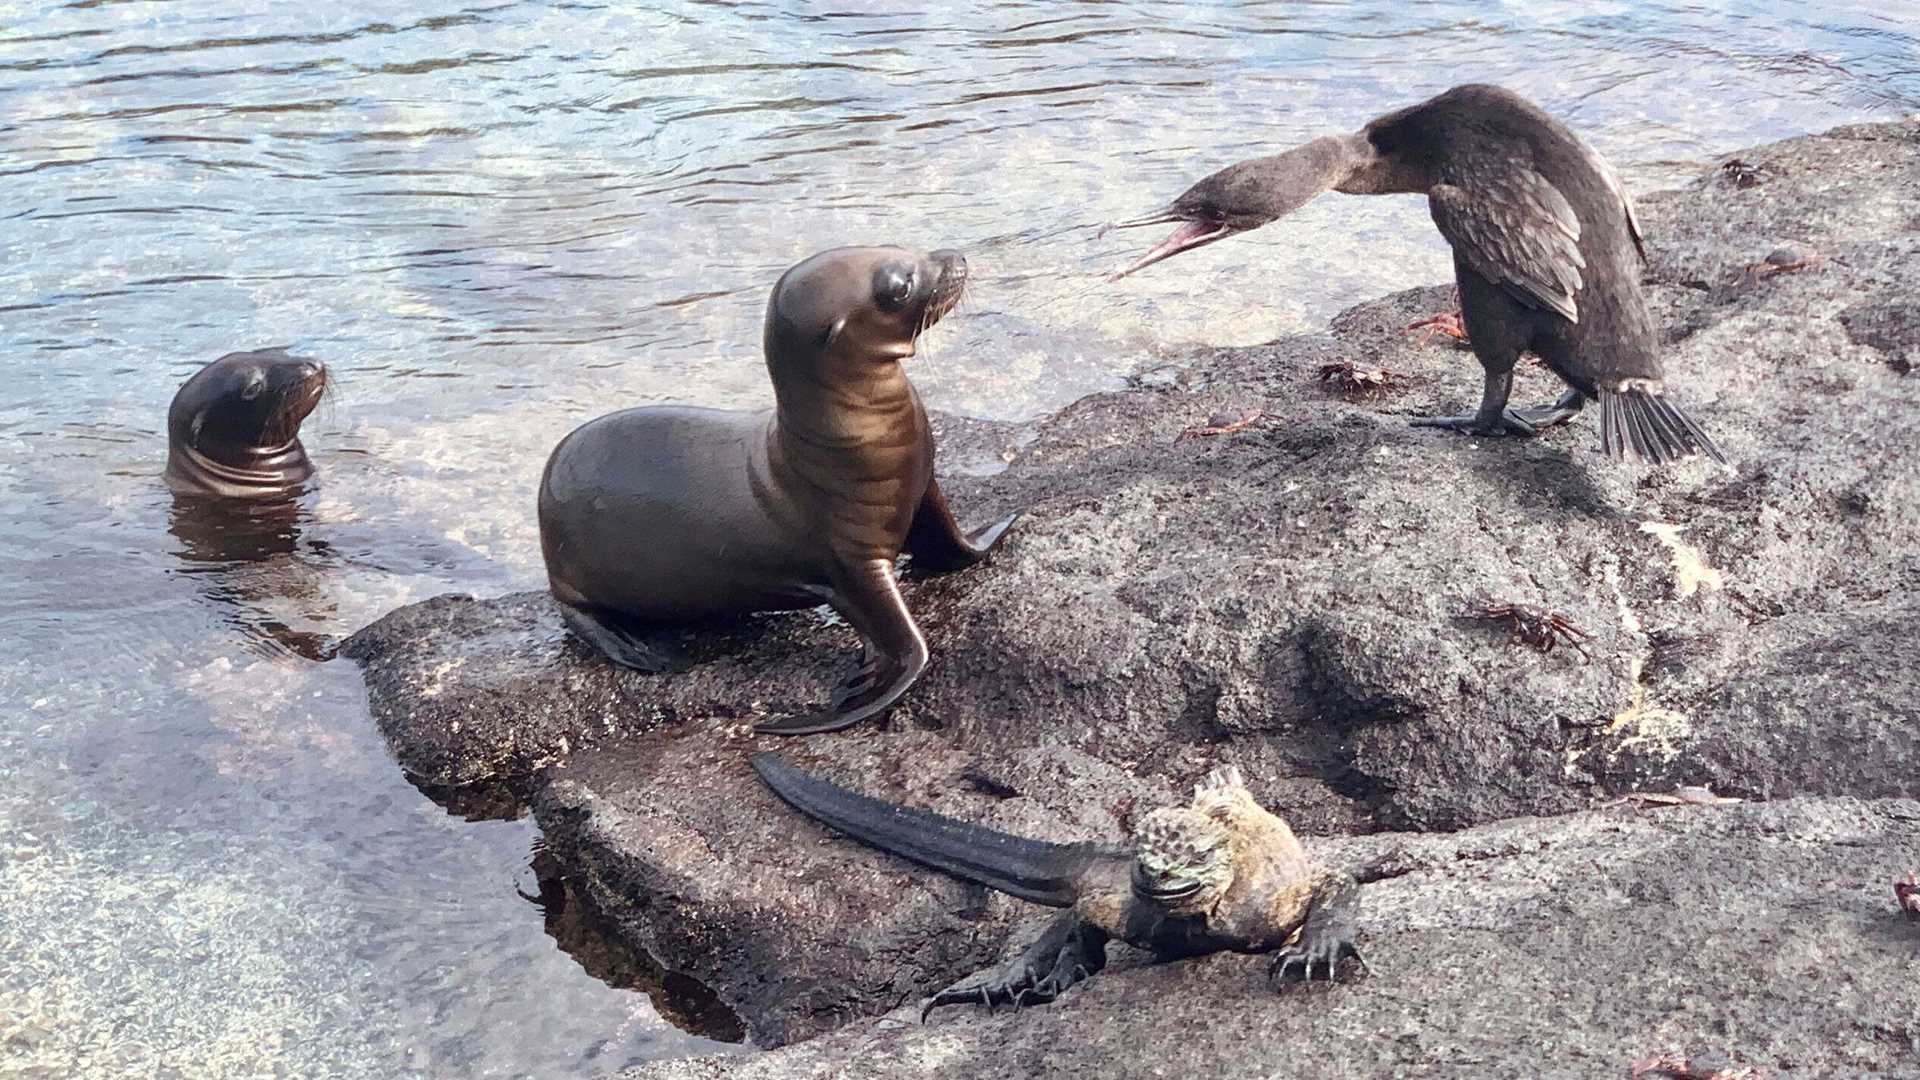 cormorant, sea lion, and marine iguana